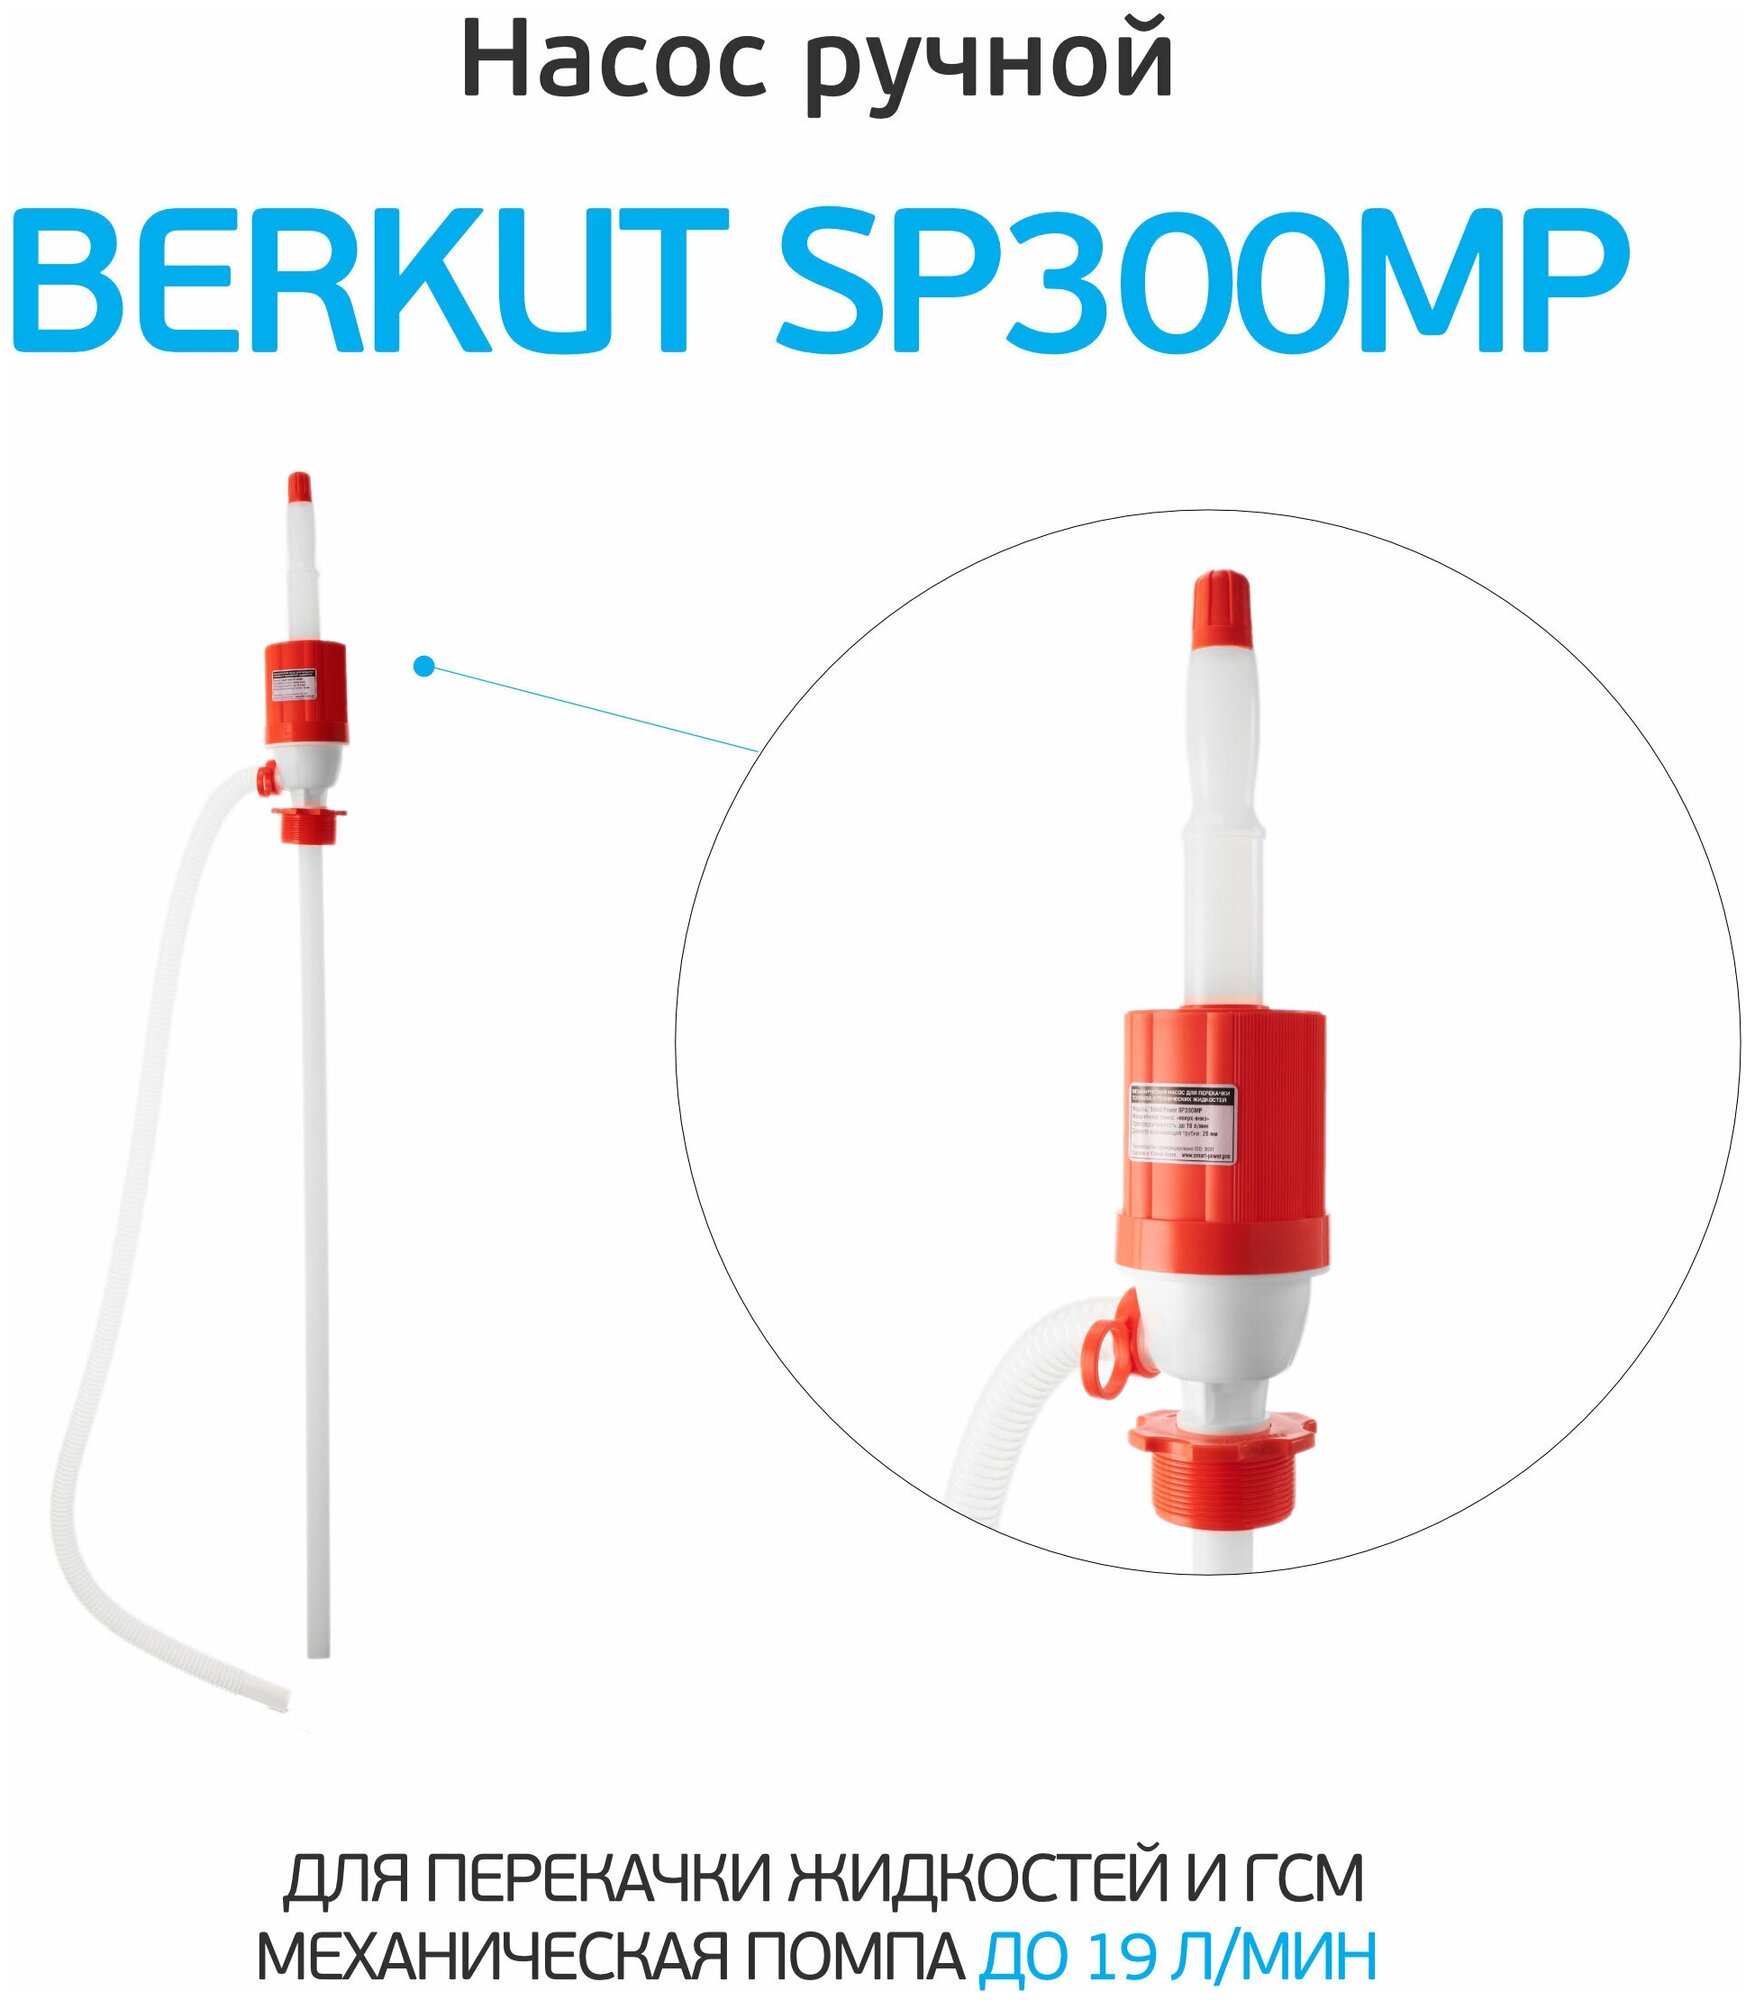 Устройство для откачки жидкостей BERKUT SP-300MP